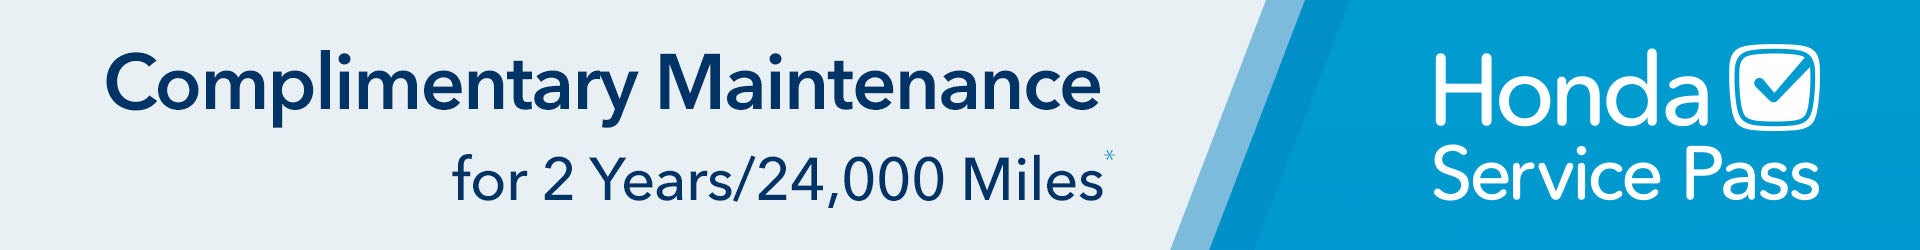 Complimentary Maintenance for 2 years / 24,000 Miles Honda Service Pass | Jim Skinner Honda in Dothan AL